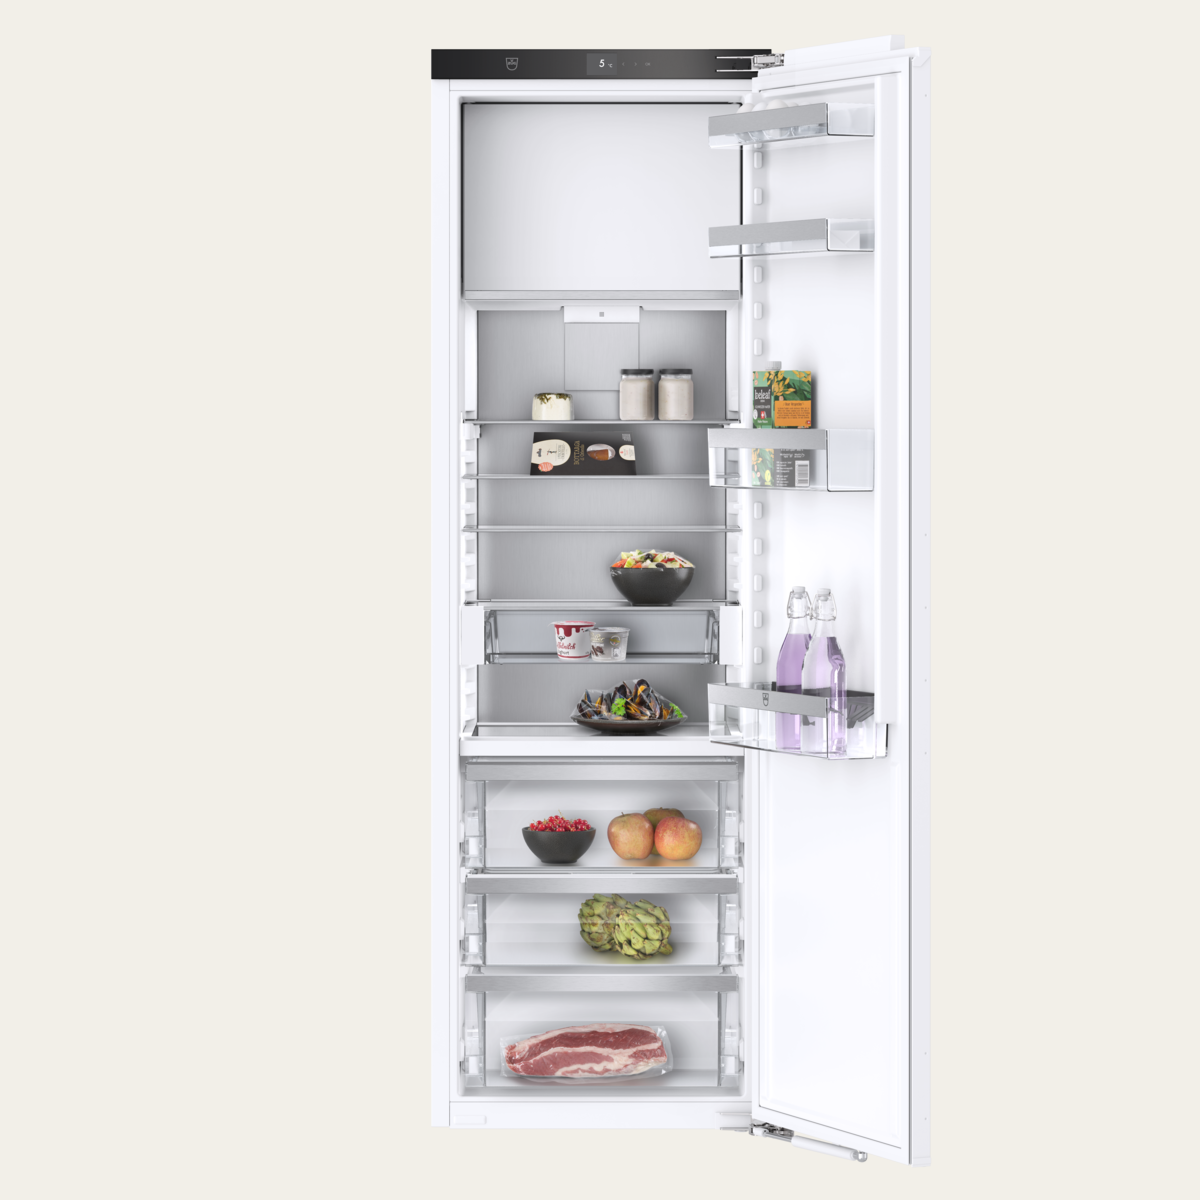 V-ZUG Refrigerator/freezer Cooler V4000 178KG, Standard width: 60 cm, Standard height: 177.8 cm, Fully integratable, Door hinge: Right, Energy efficiency class: D